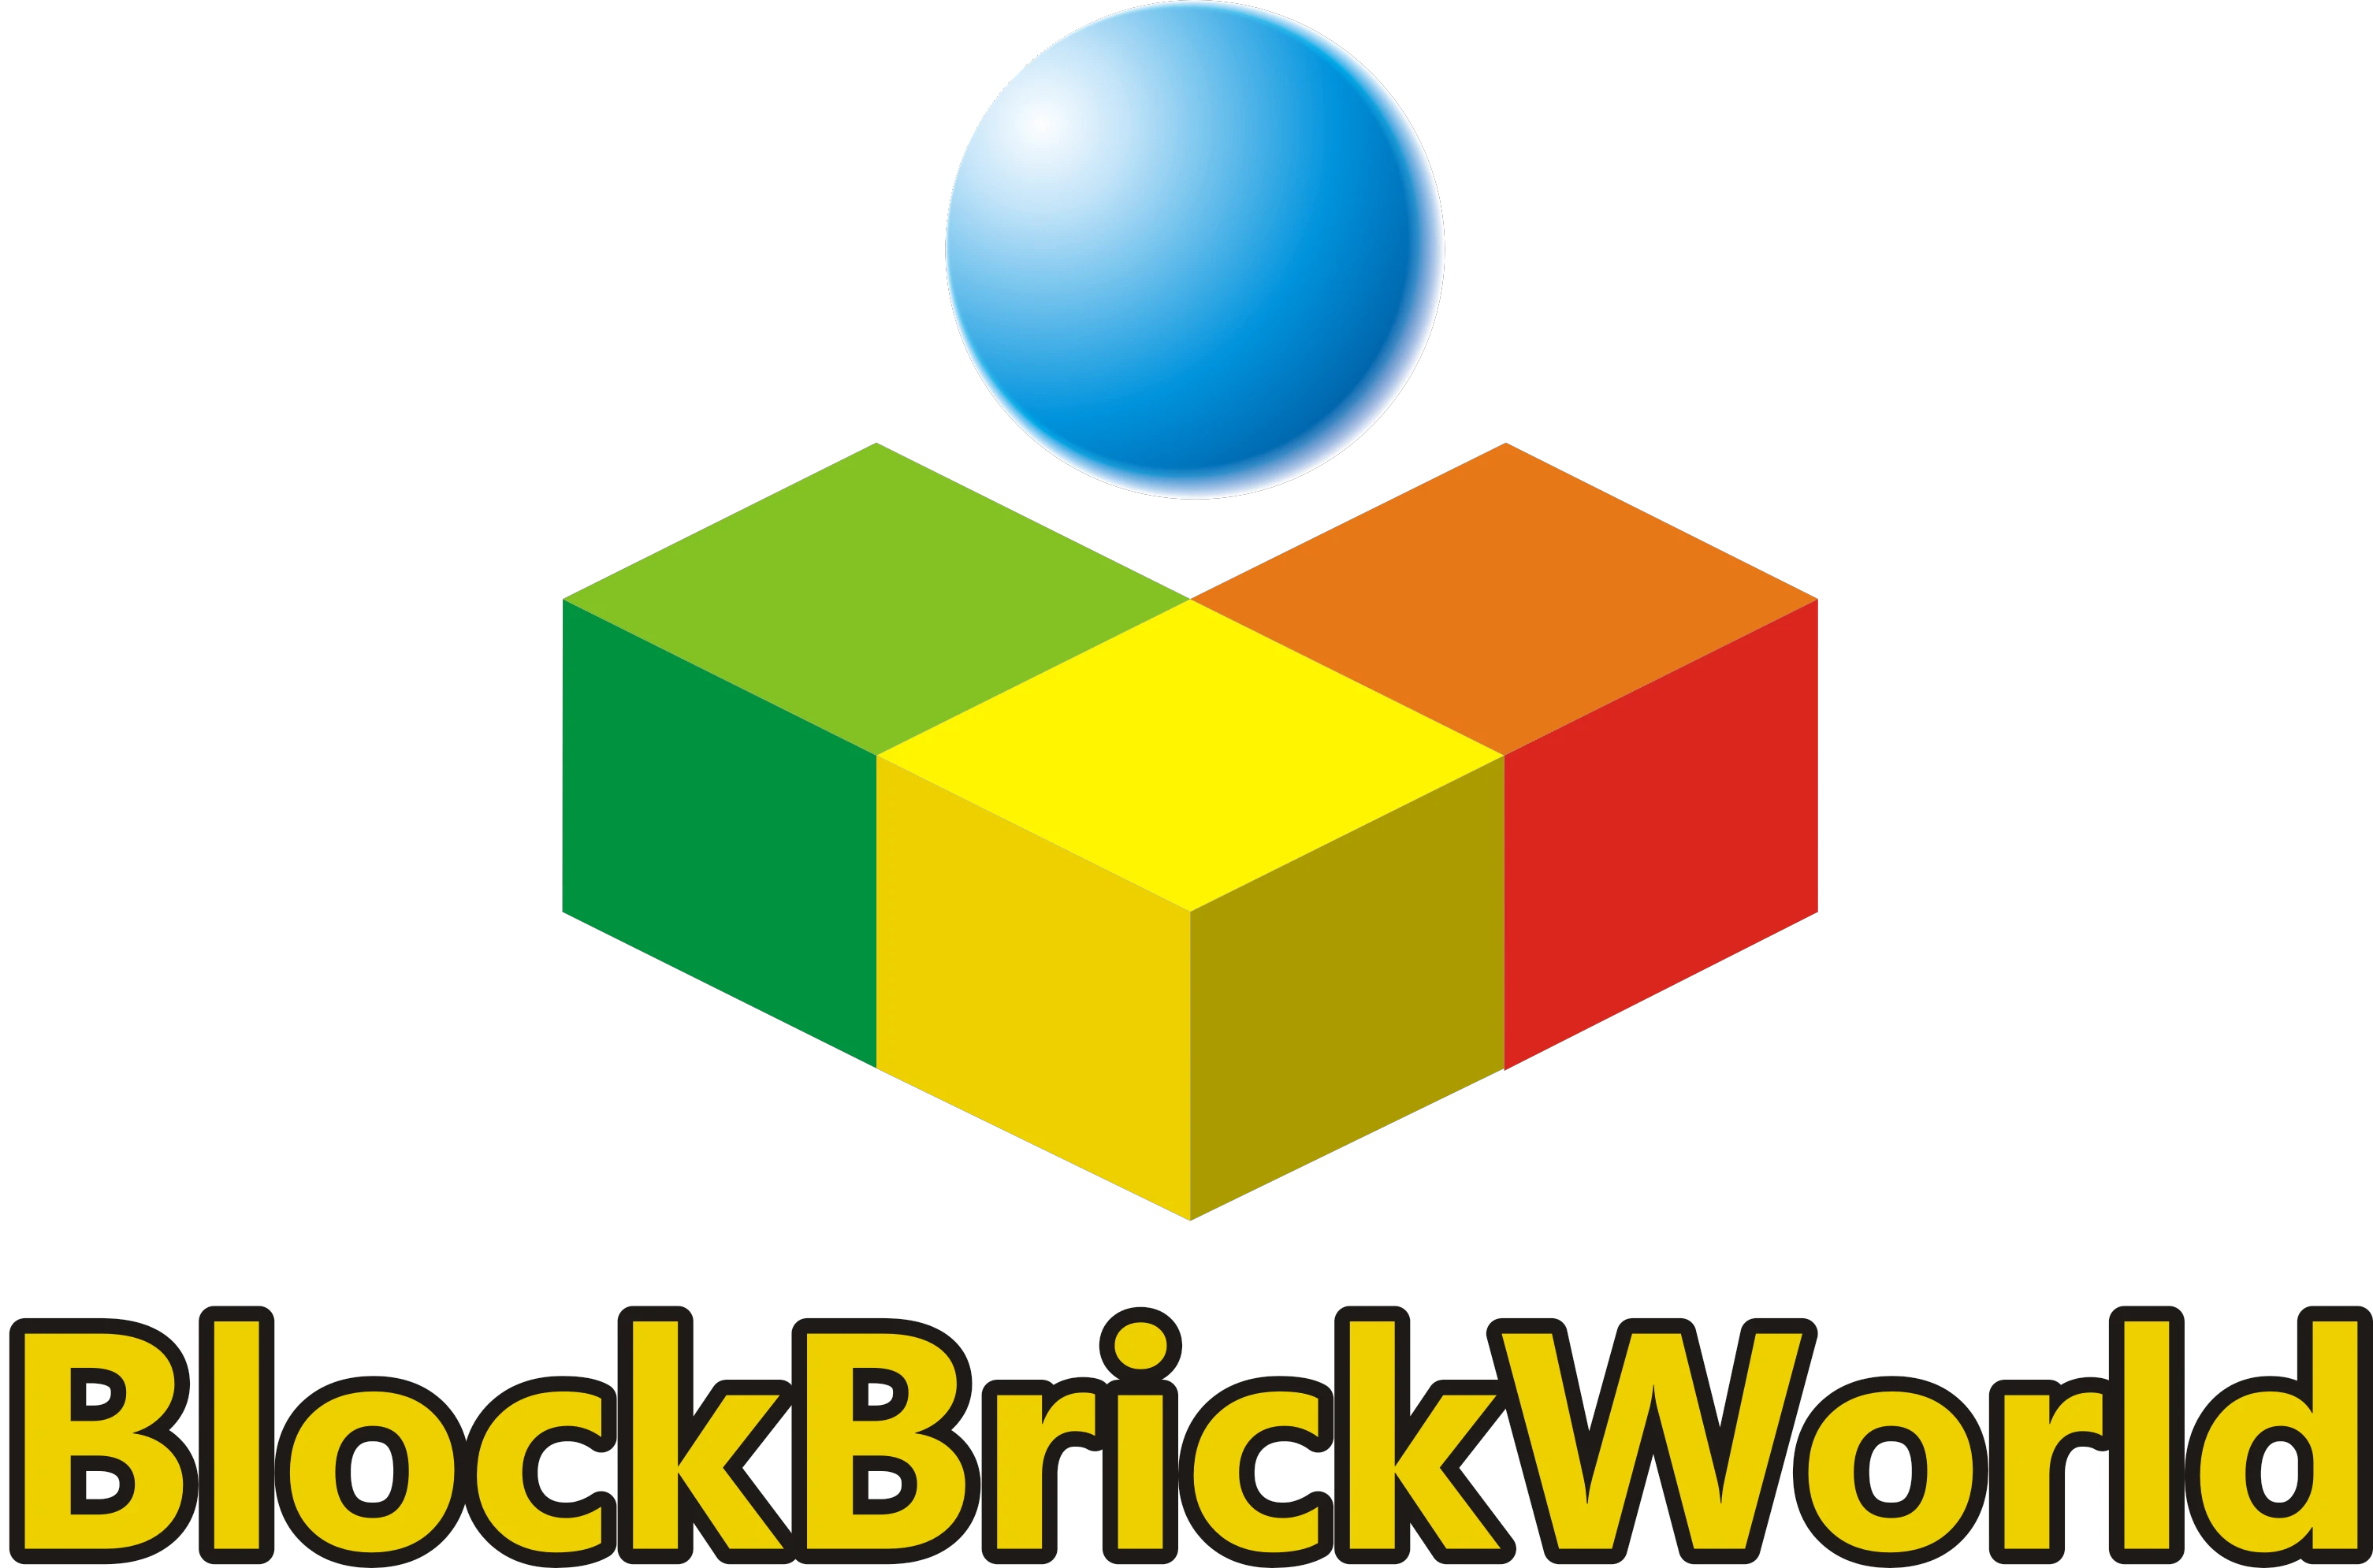  Block Brick World promotions